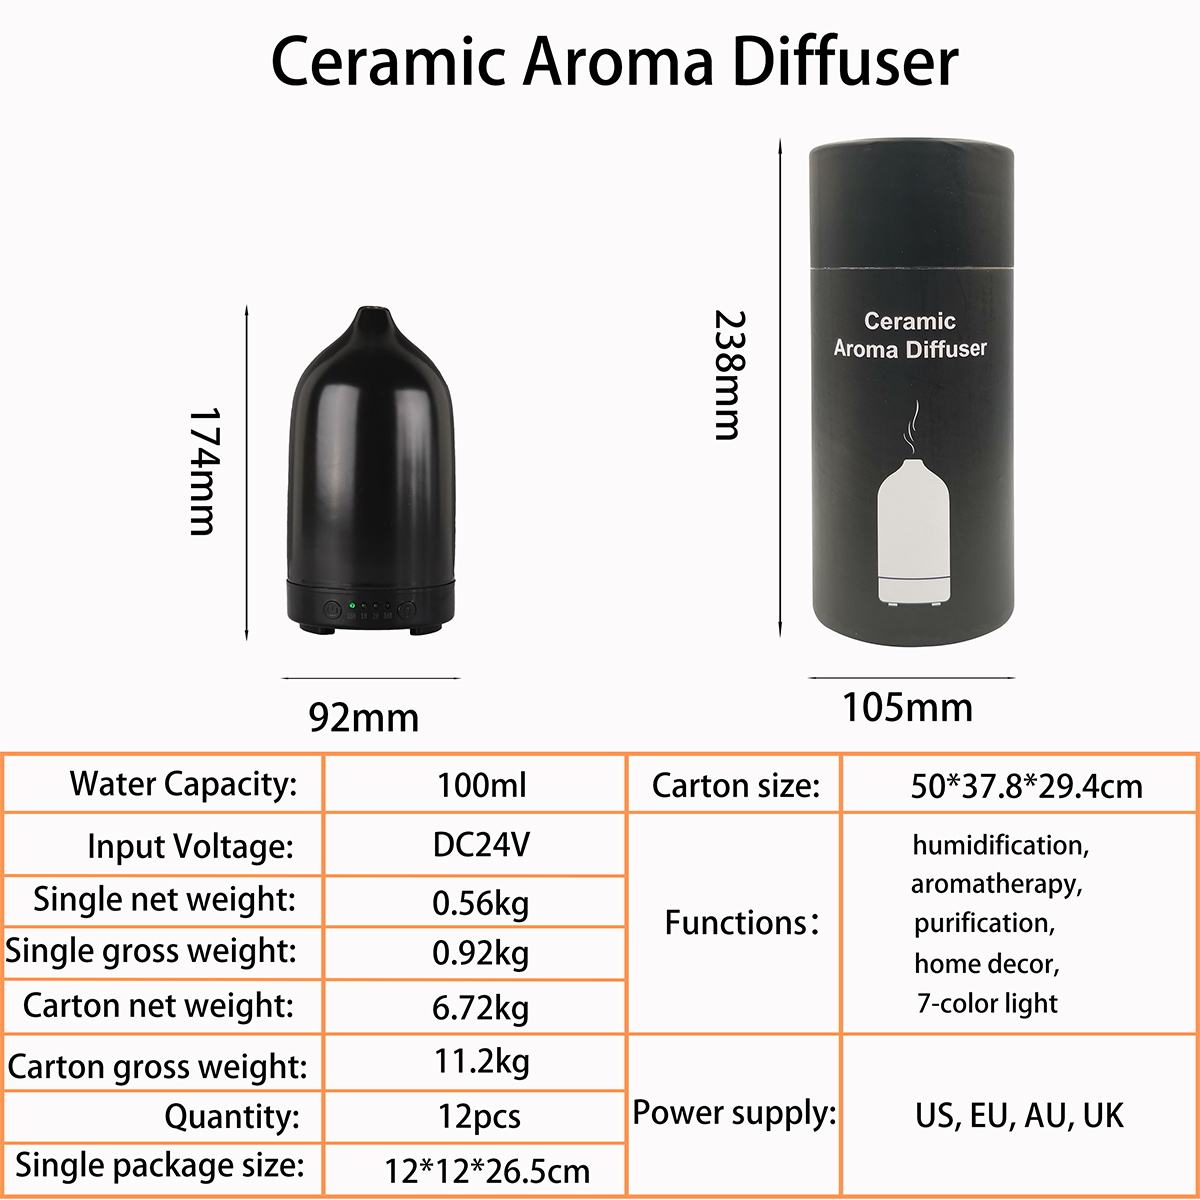 Ceramic aroma diffuser package